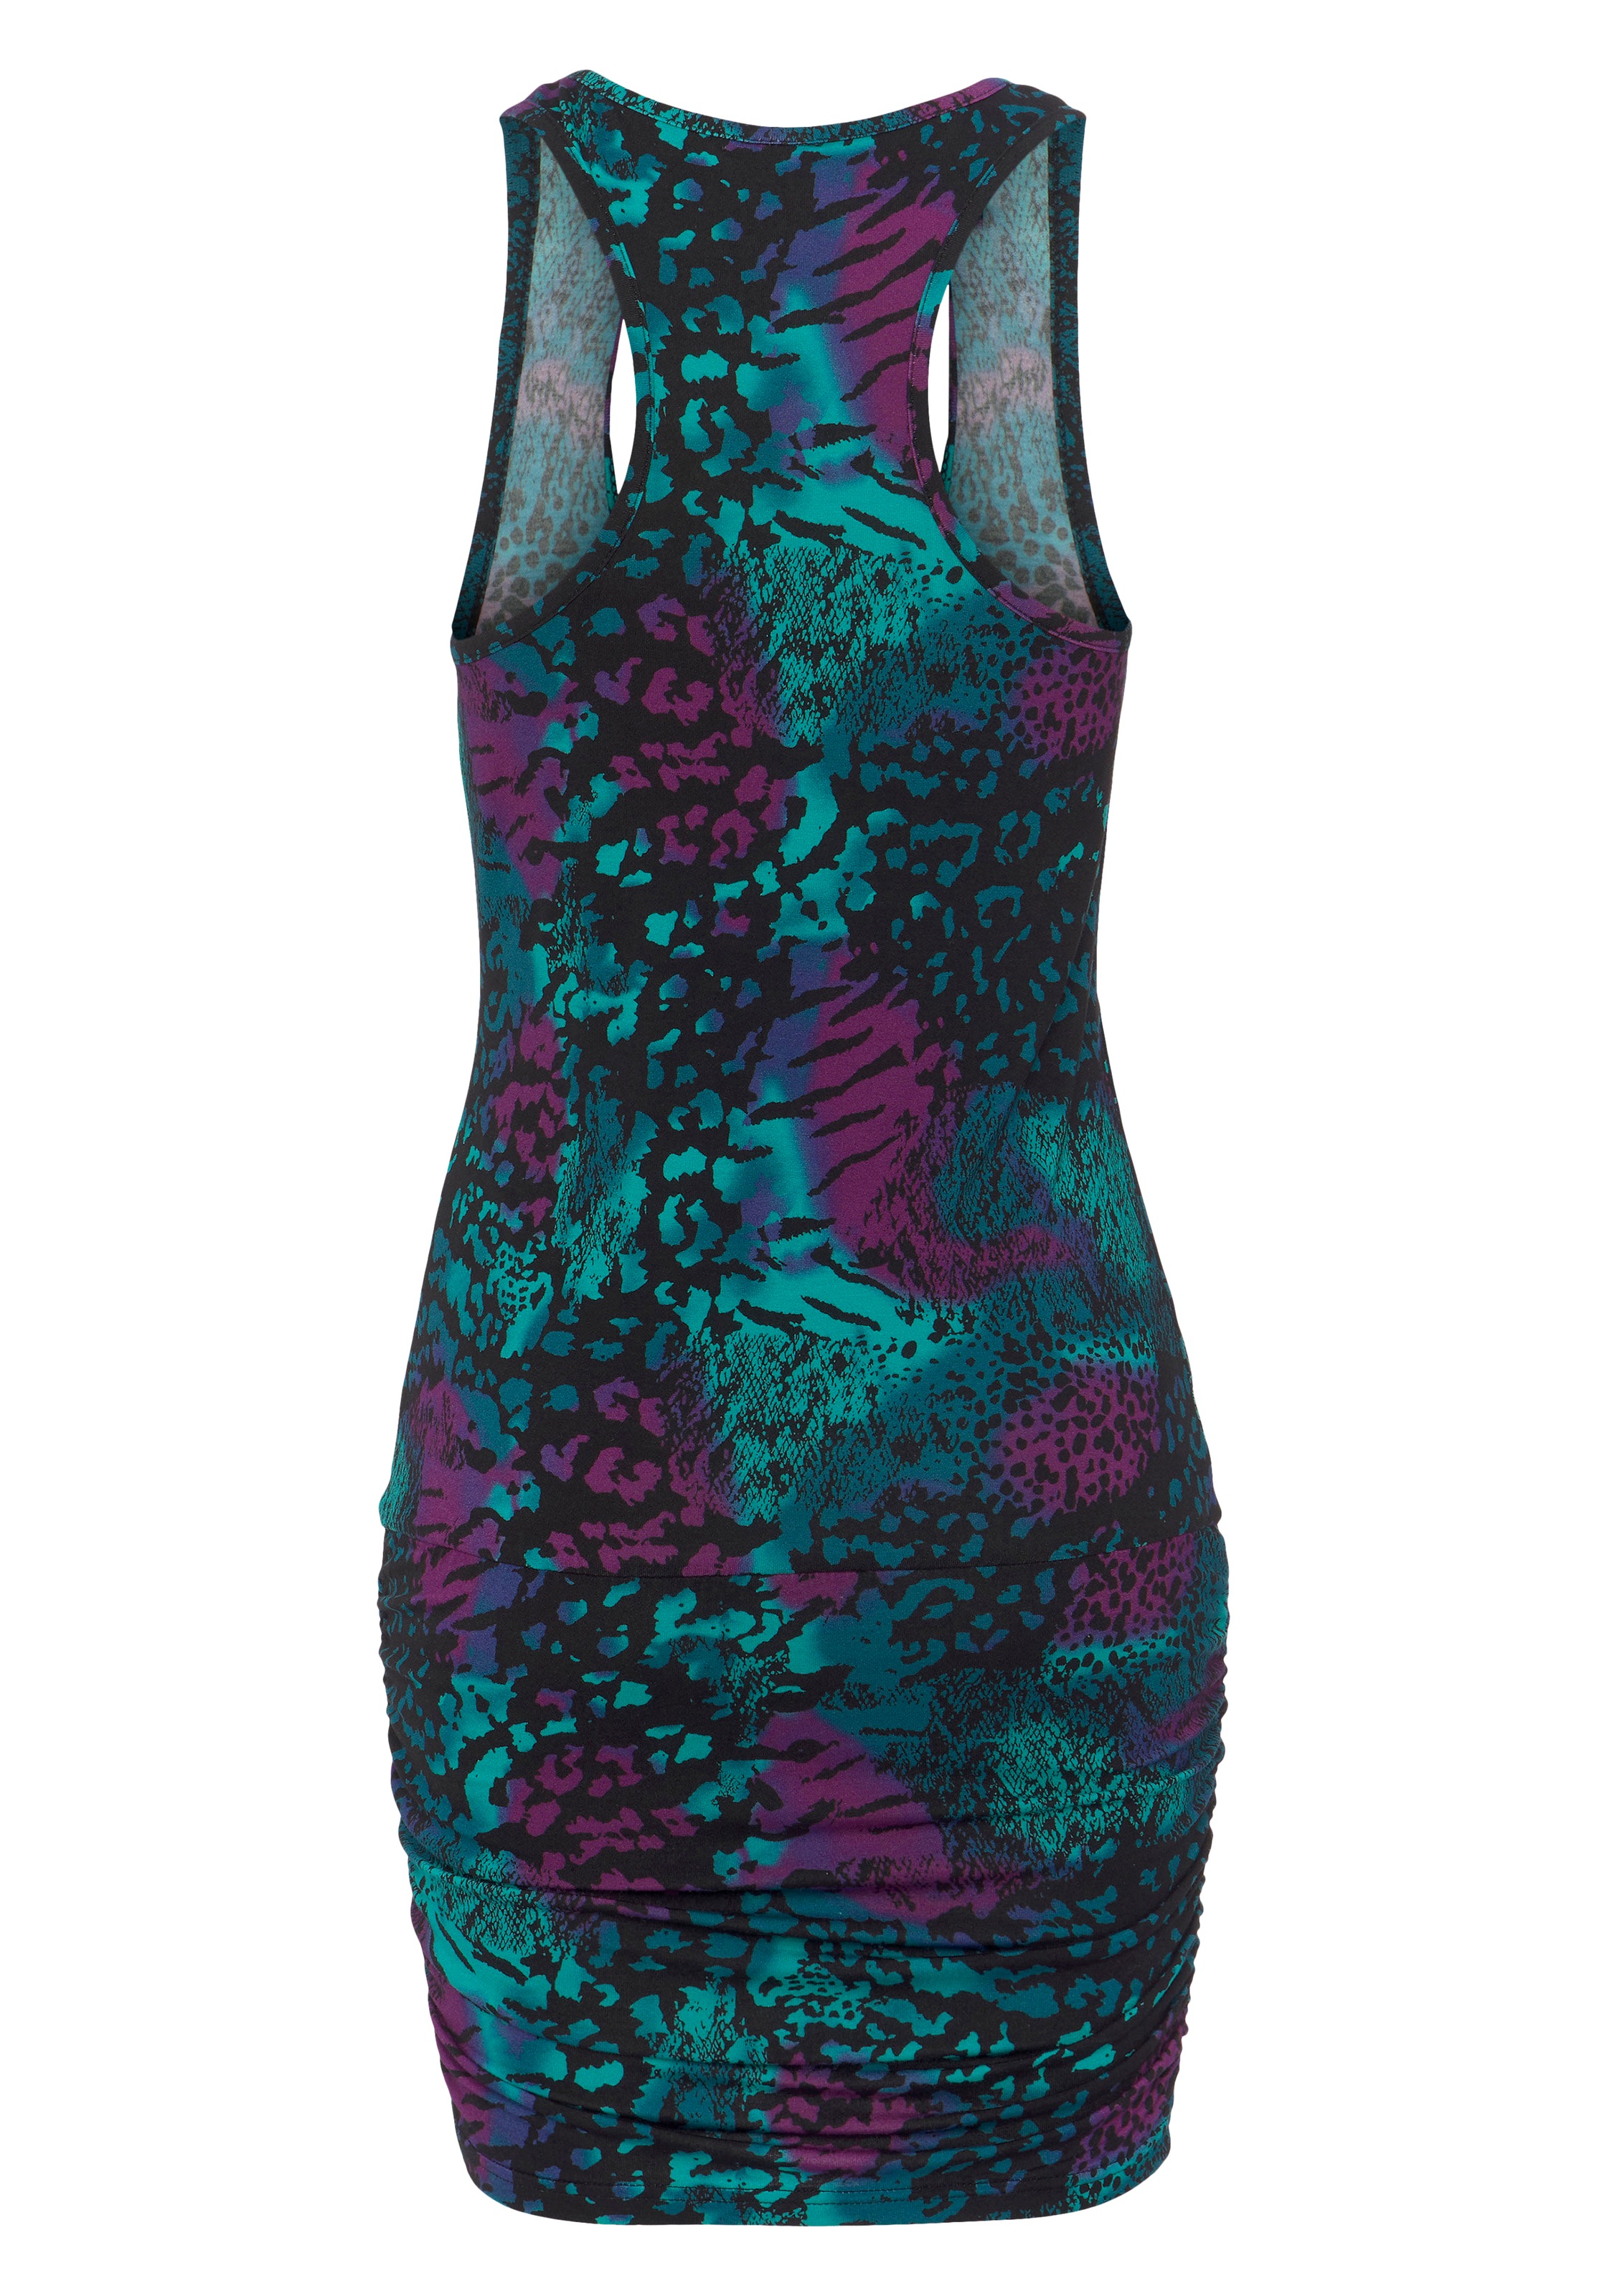 LASCANA Druckkleid, aus Jerseyqualität im Animal-Look, kurzes Sommerkleid, Strandkleid